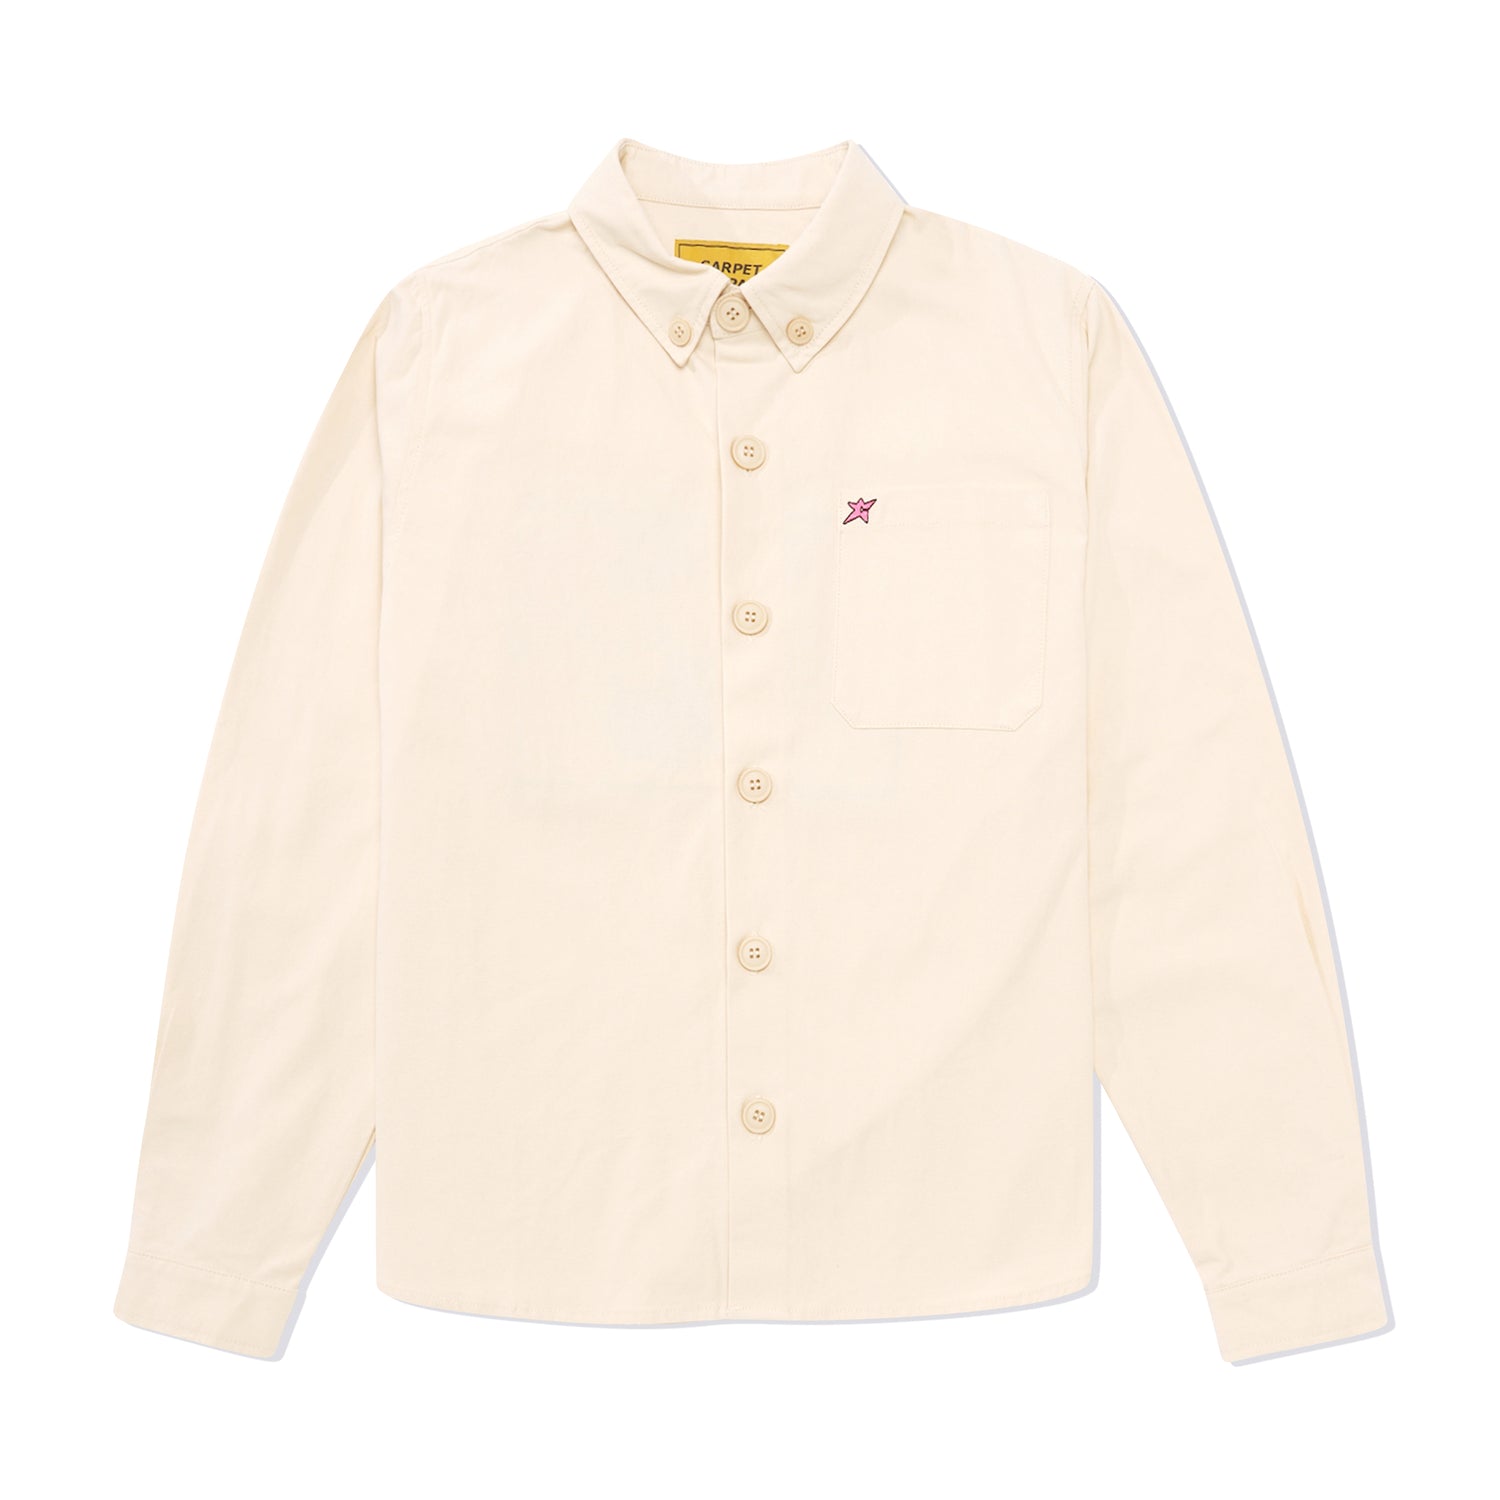 C-Star Button Up Shirt, Cream